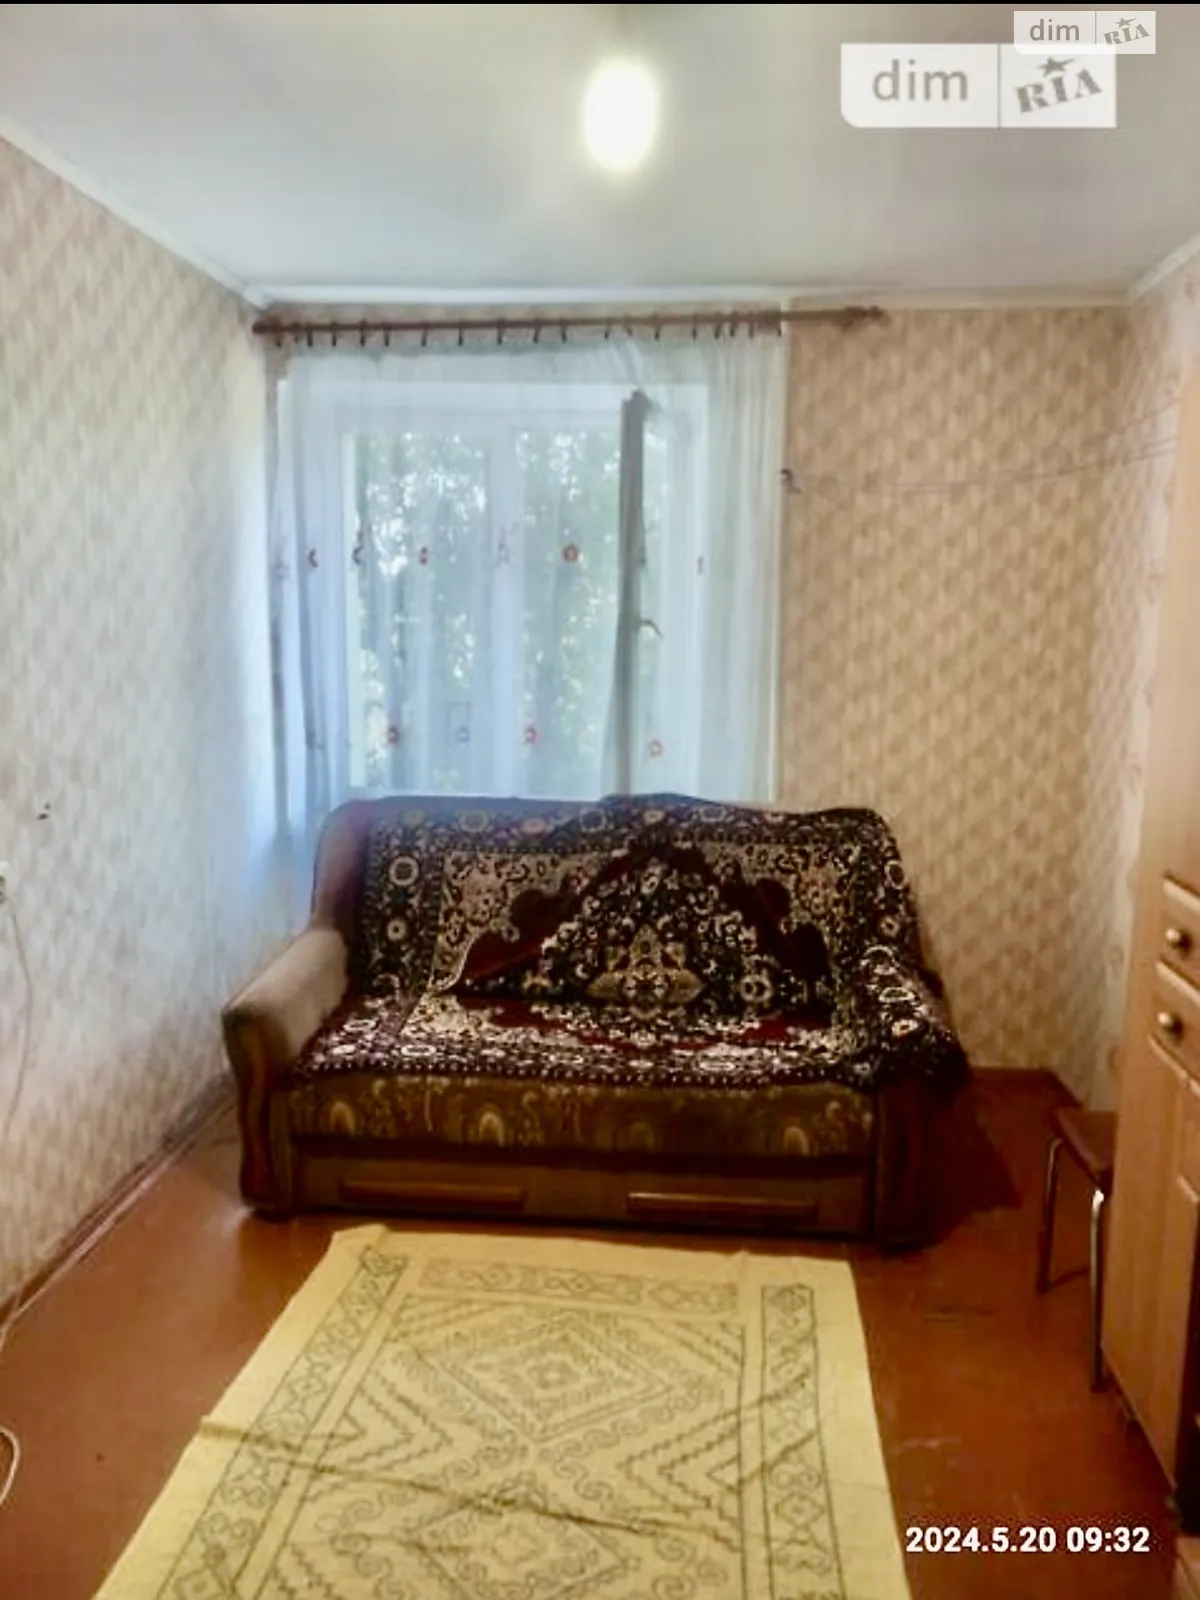 Продается комната 15 кв. м в Ровно - фото 2